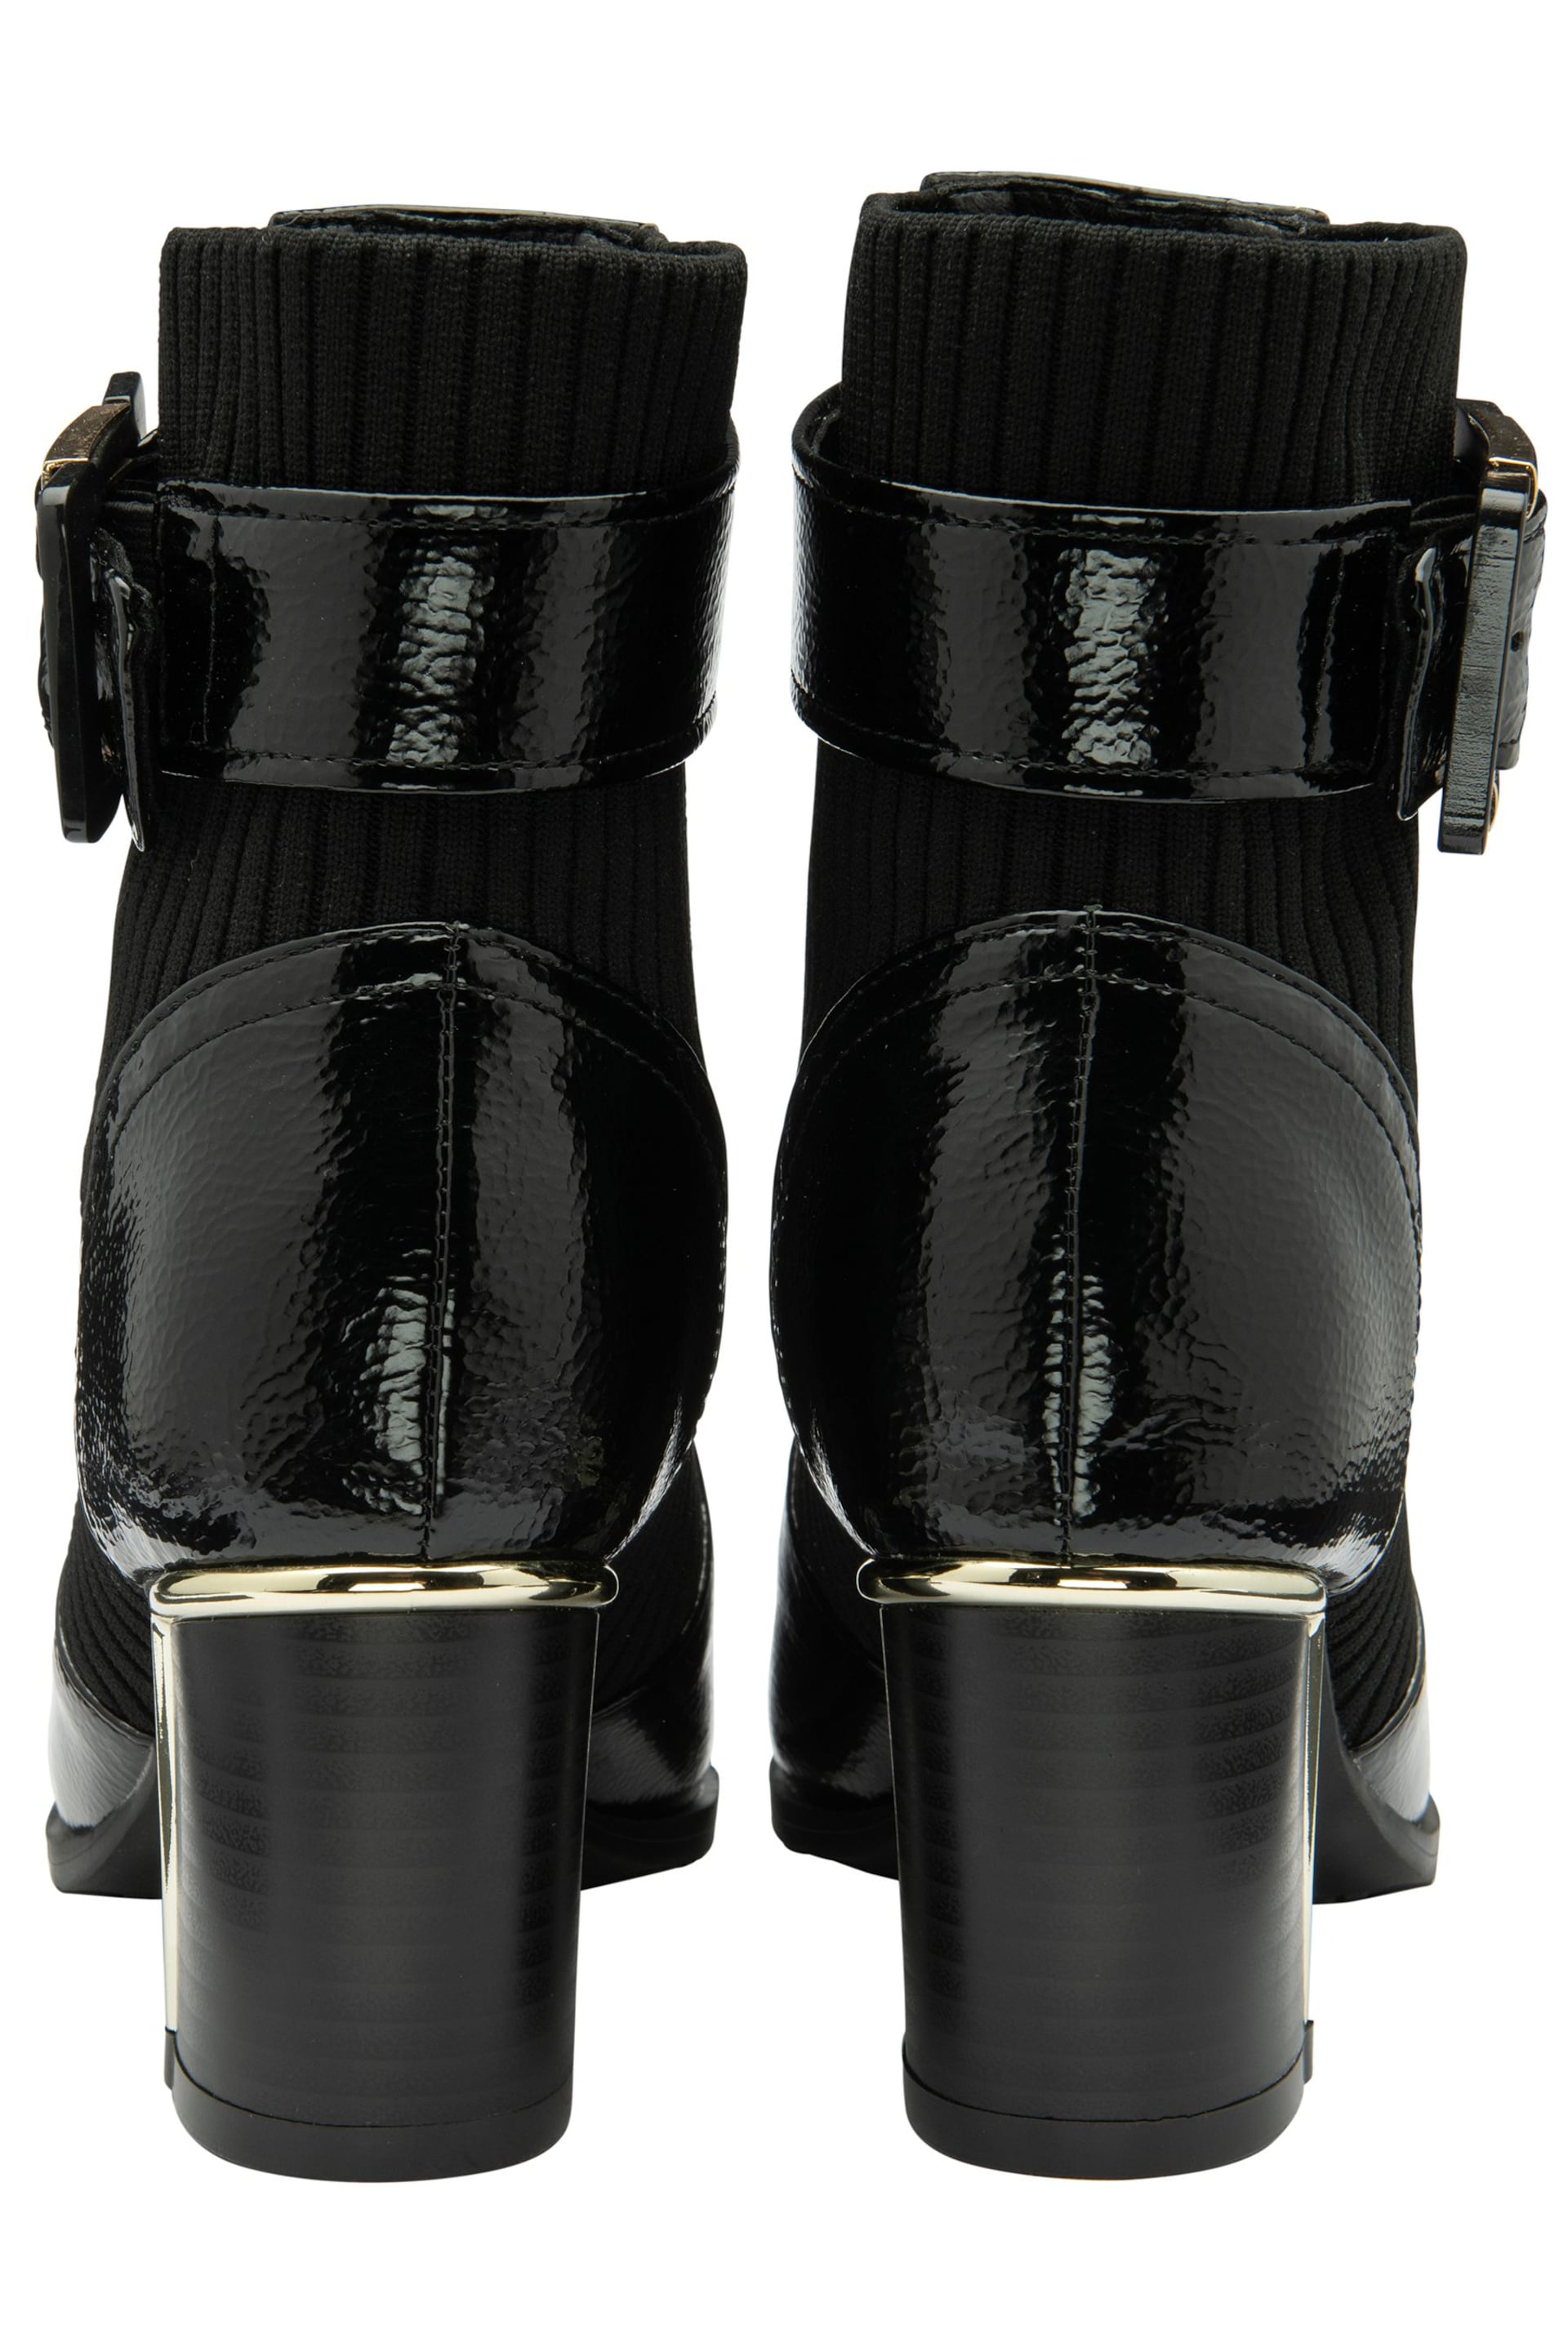 Lotus Jet Black Heeled Ankle Boots - Image 3 of 4